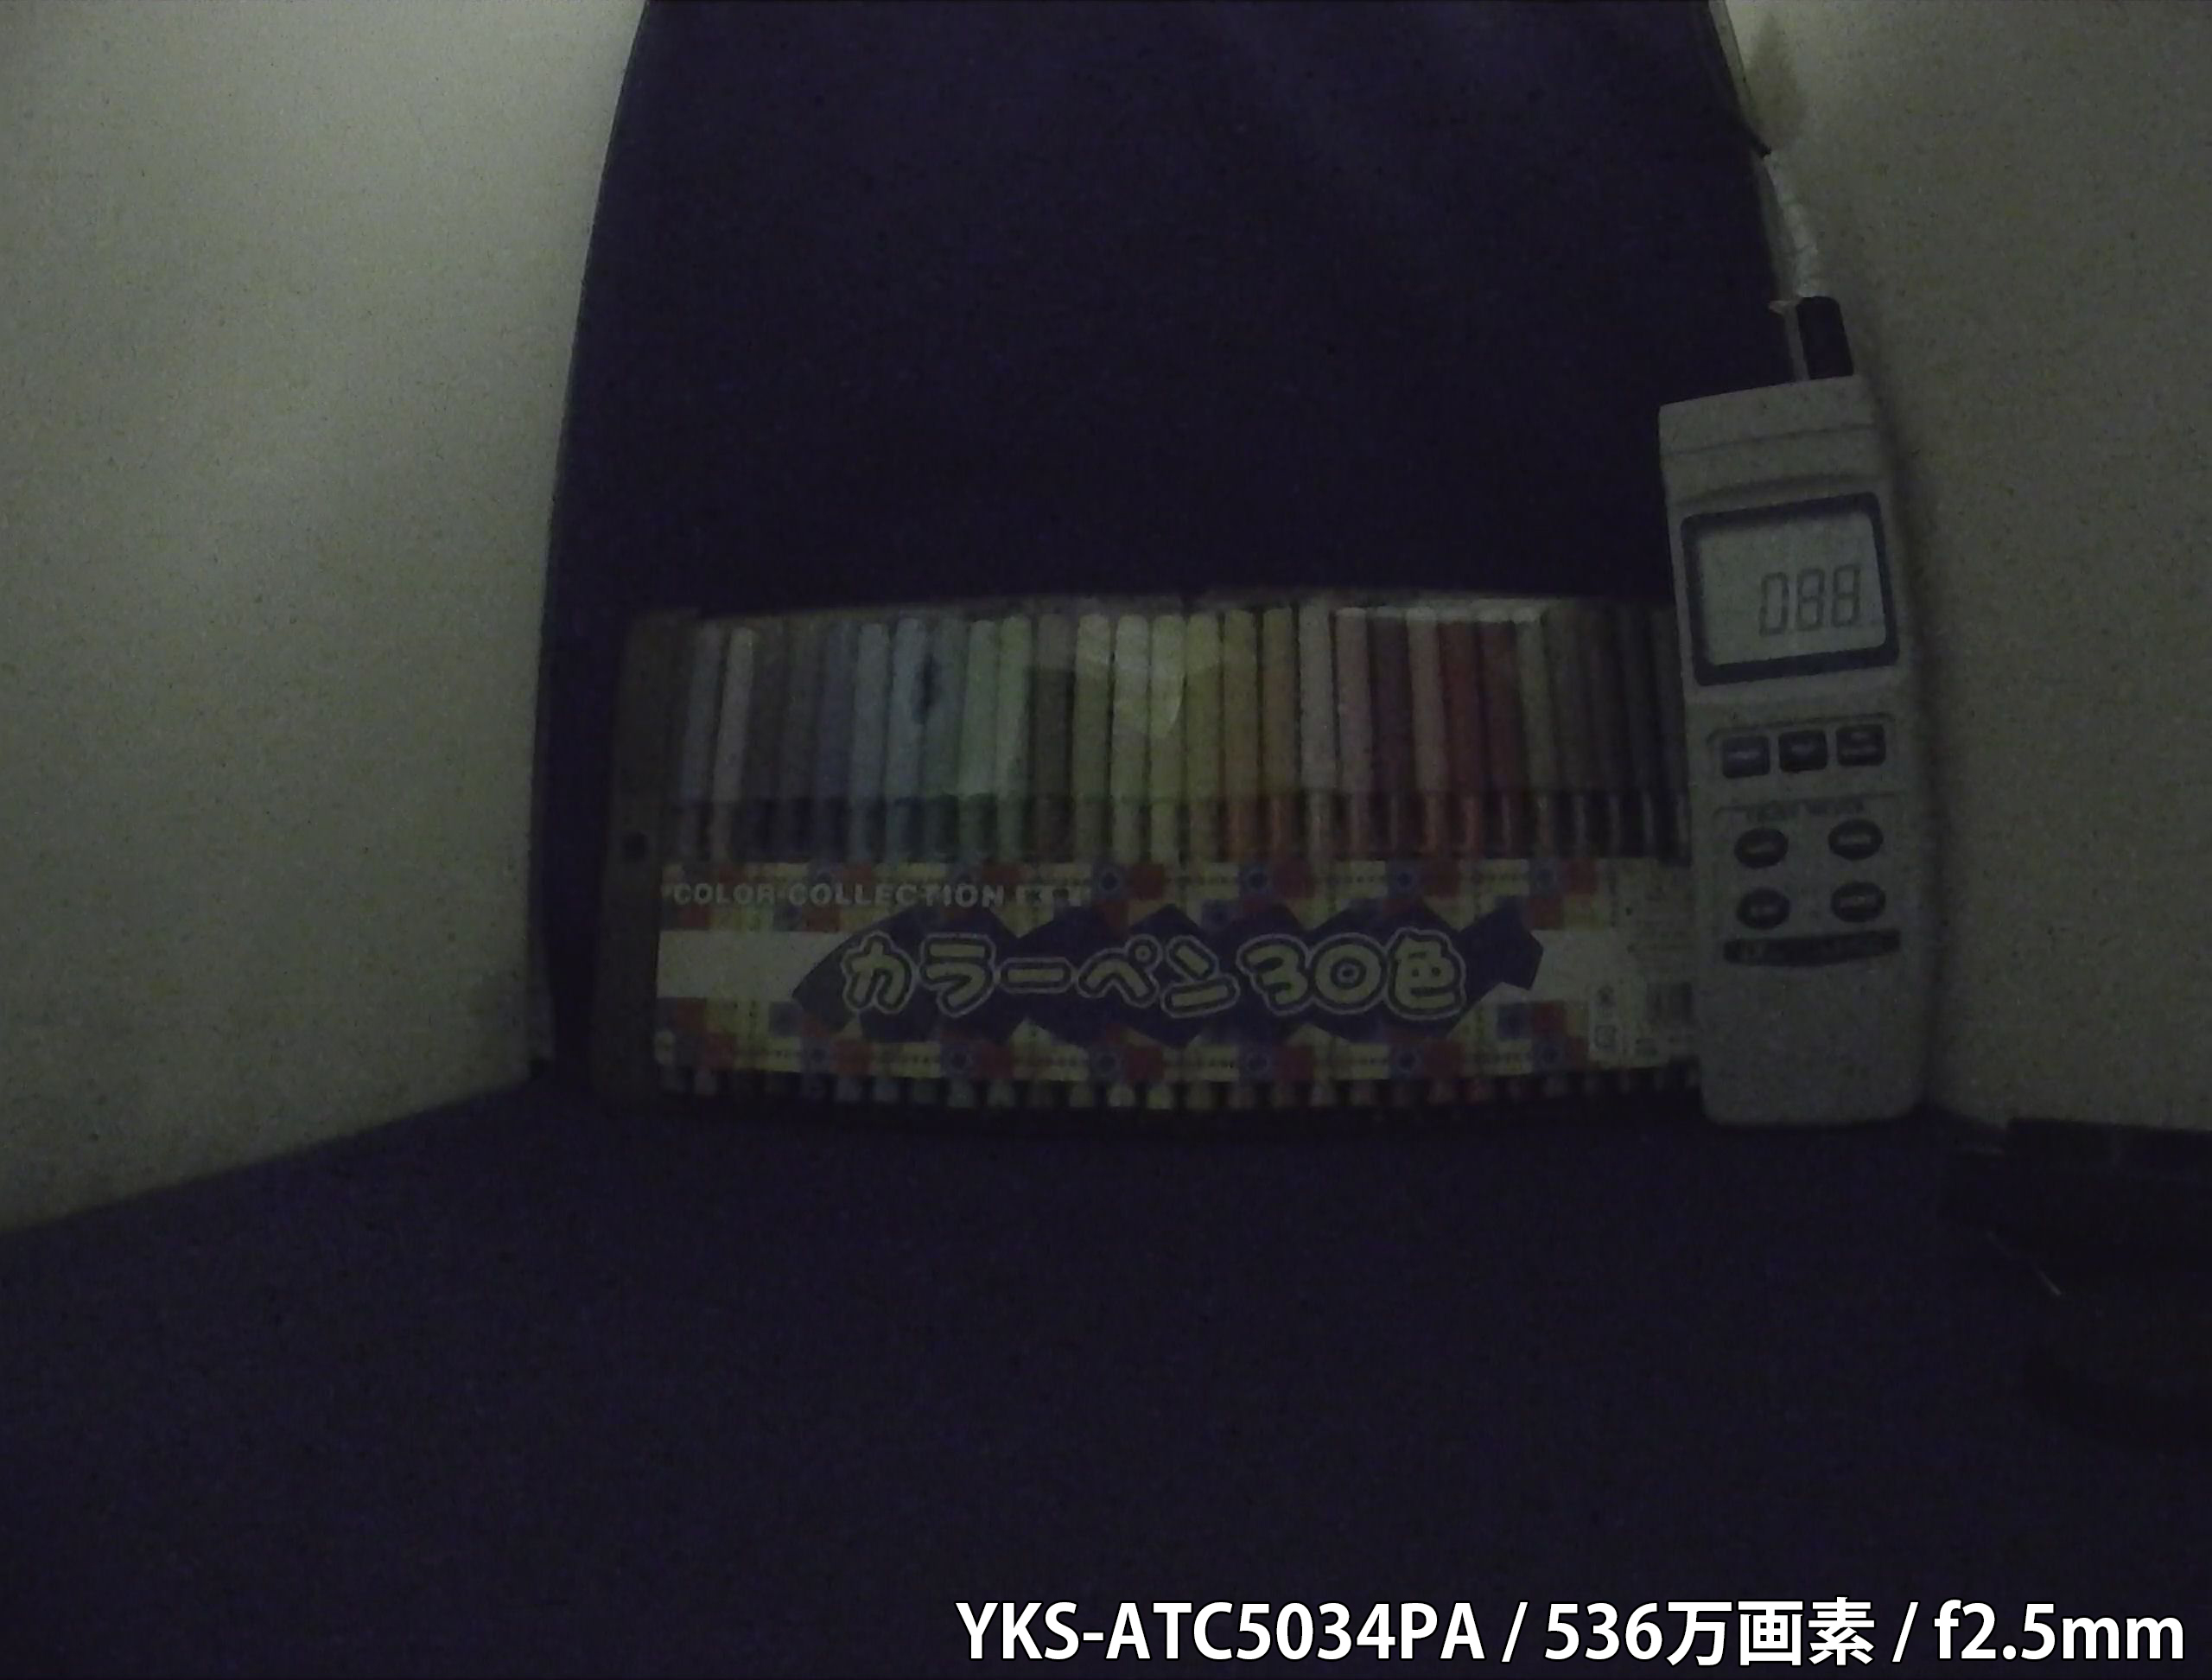 【YKS-ATC5304PA】カメラから約40cm離れた被写体を低照度撮影